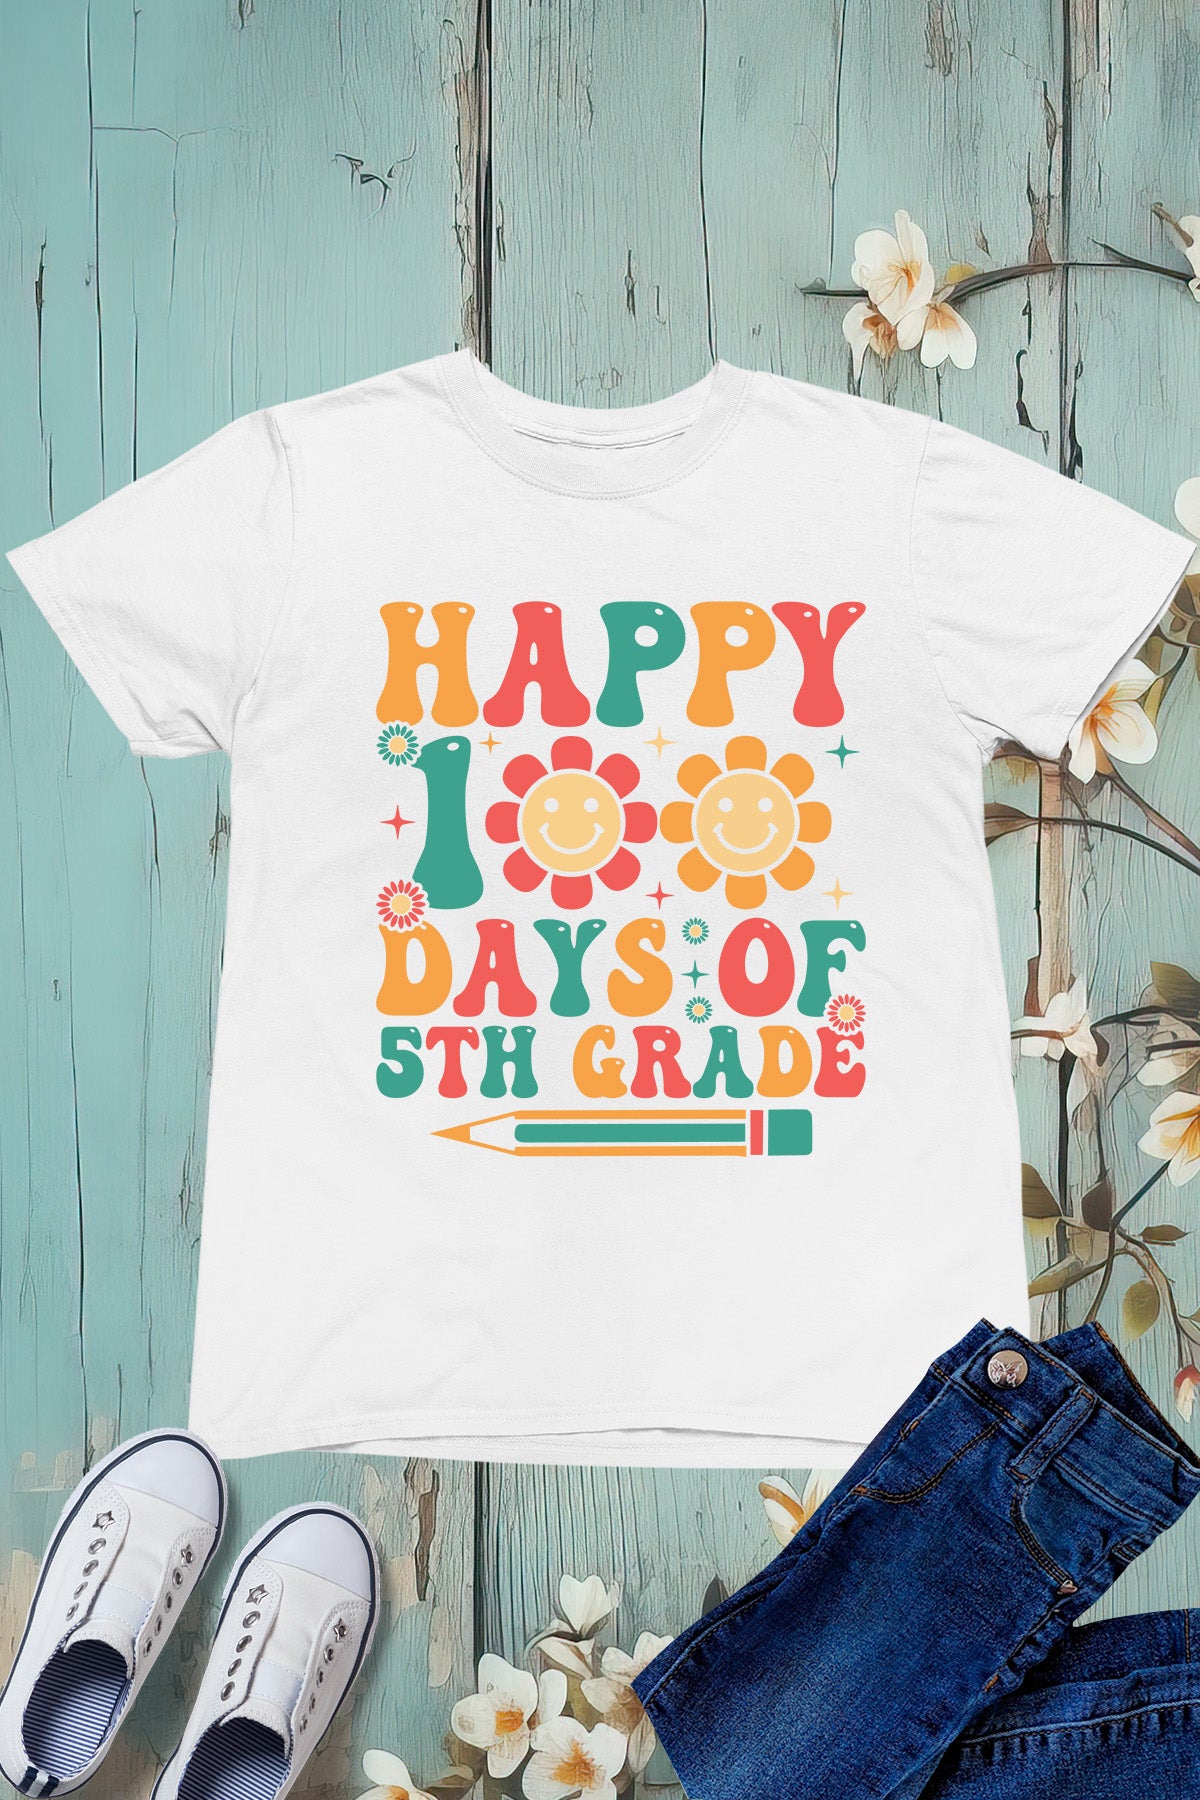 Happy 100 Days of 5th Grade Shirt